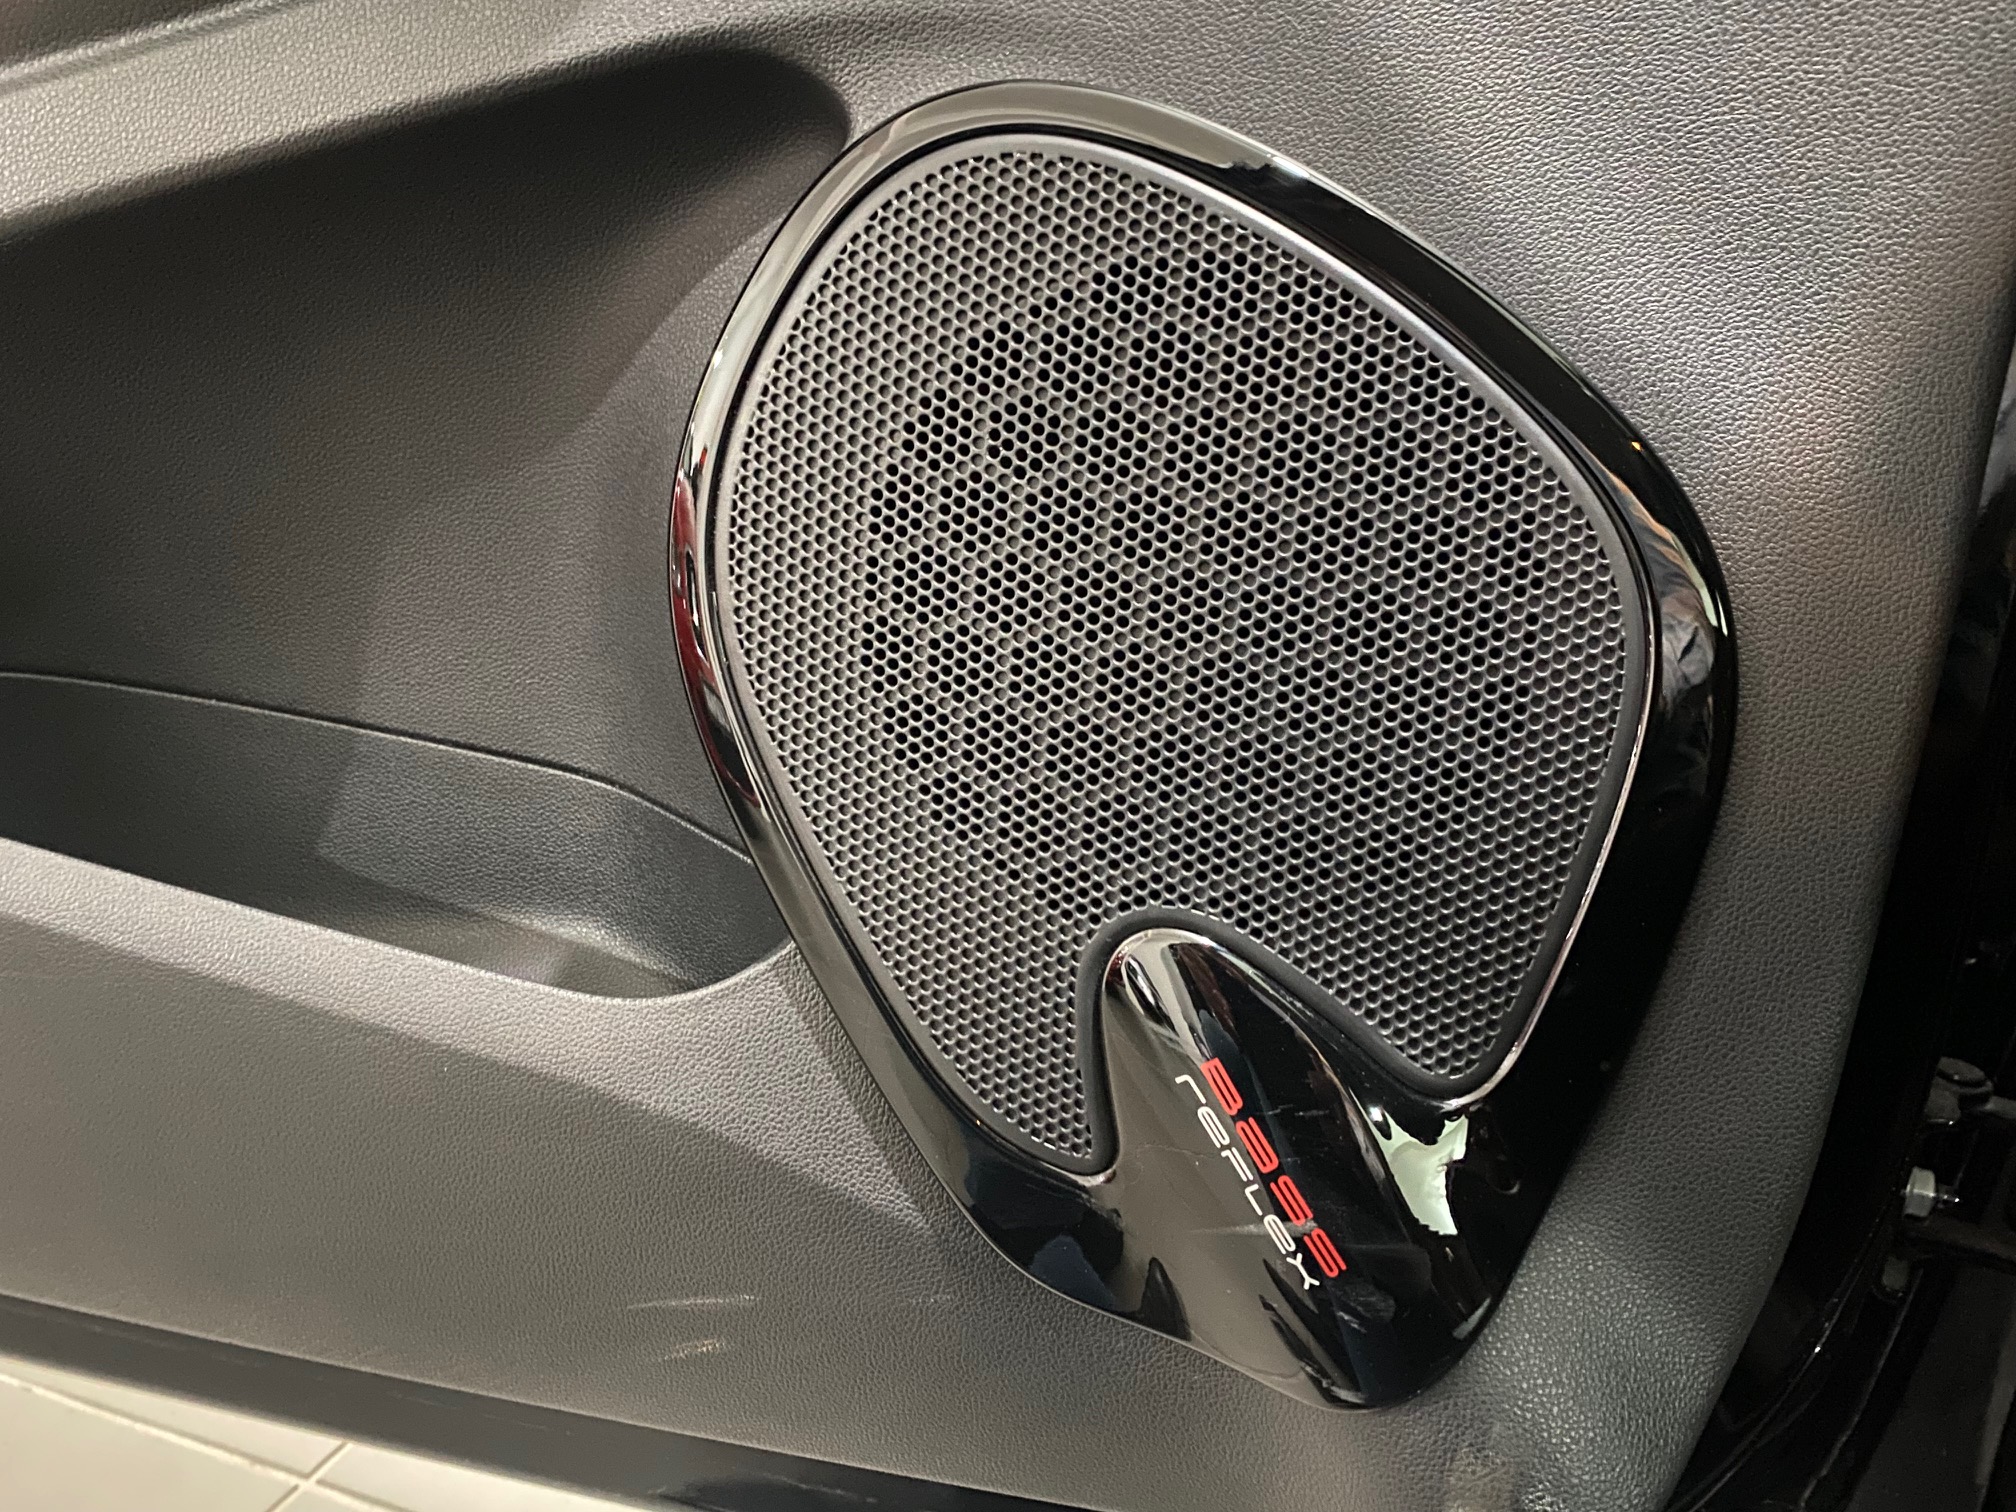 RENAULT CLIO 0.9 Tce Gasolina  – 90 cv – Abril 2019